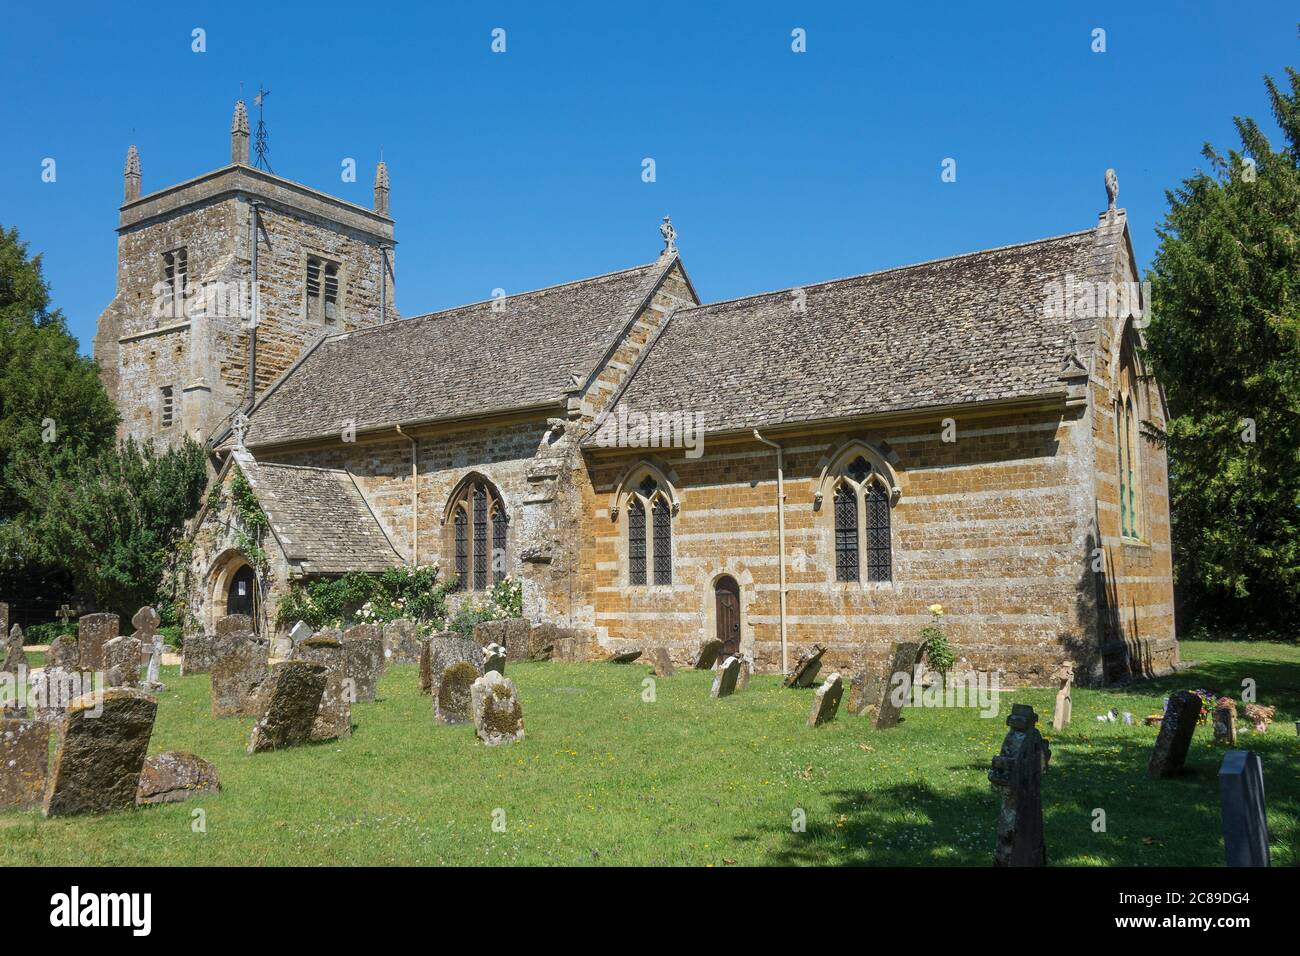 England, Oxfordshire, Duns Tew church Stock Photo